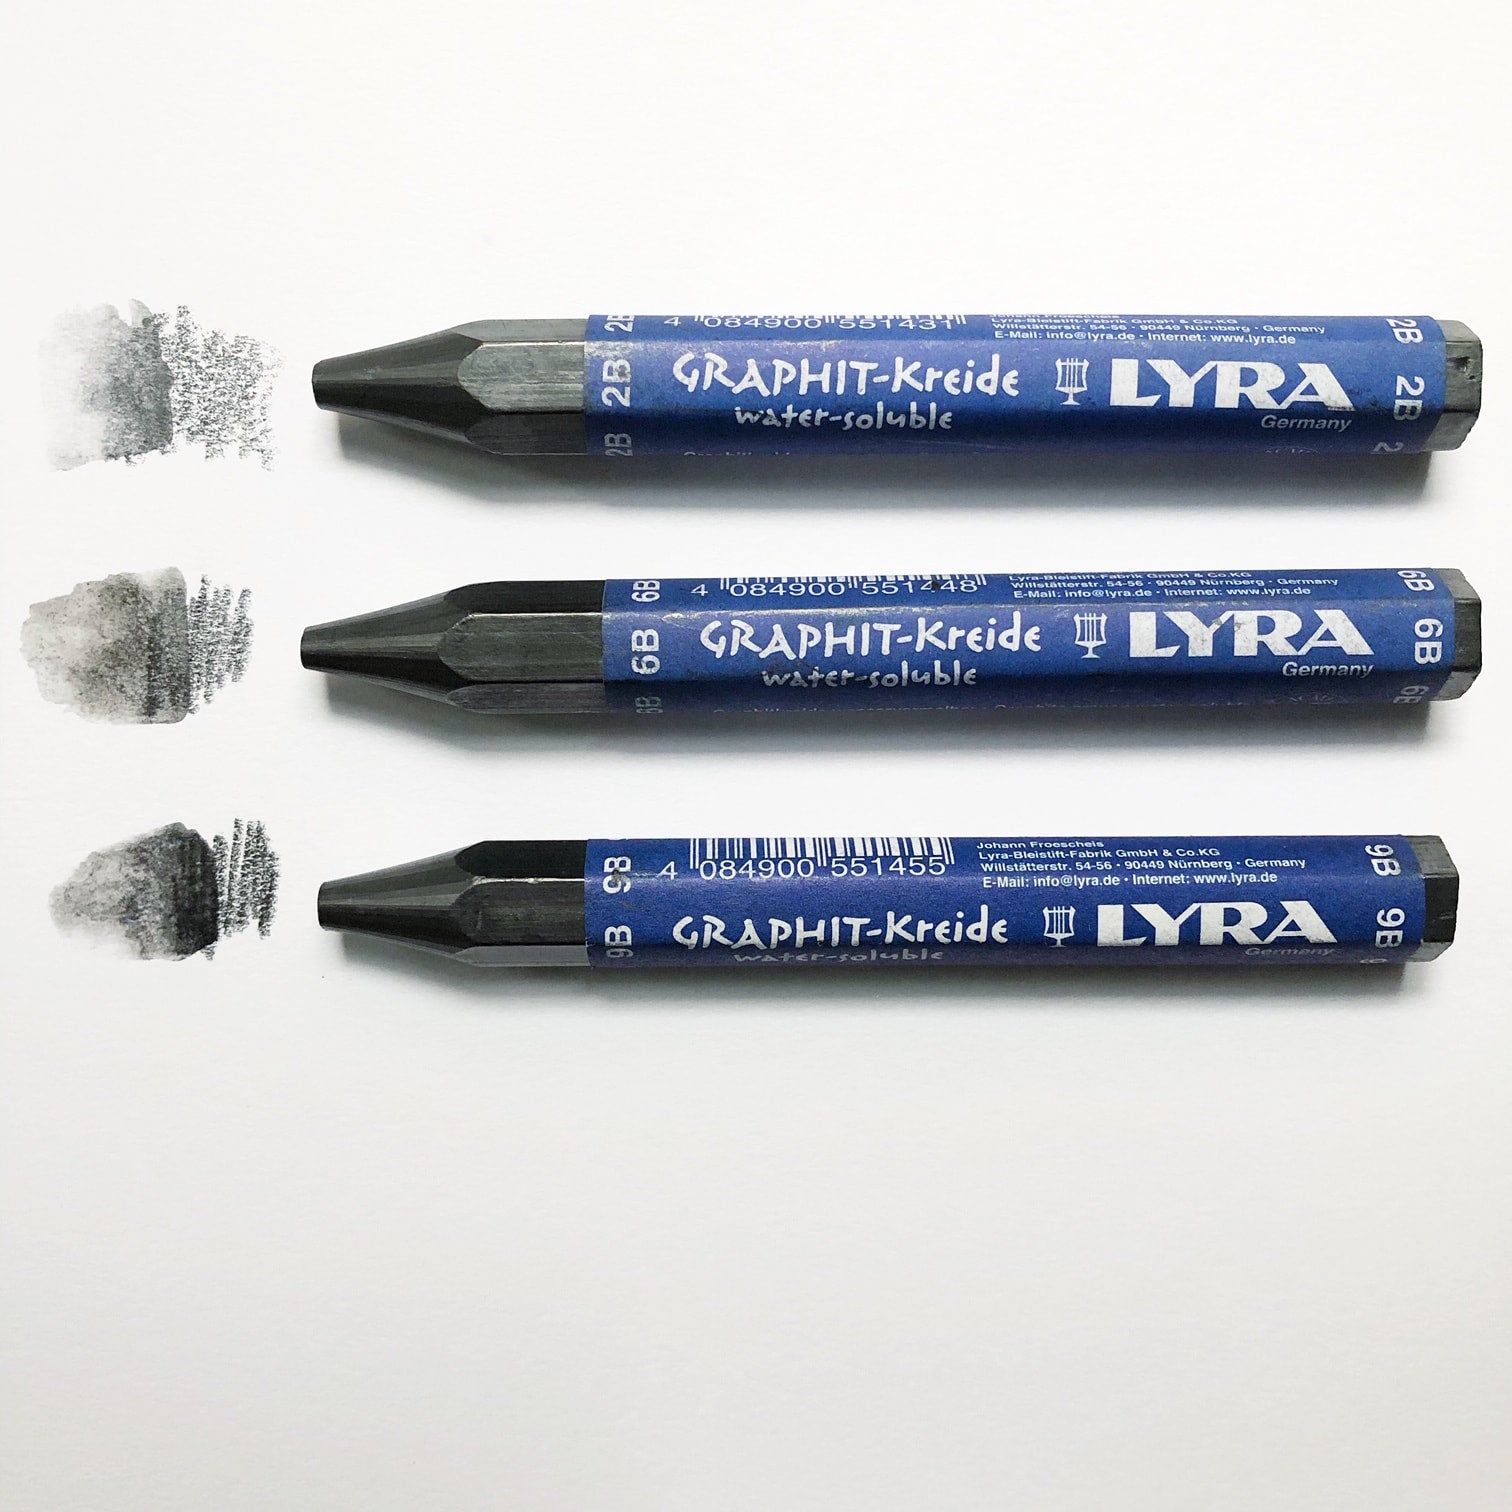 LYRA Graphite Crayon 2B